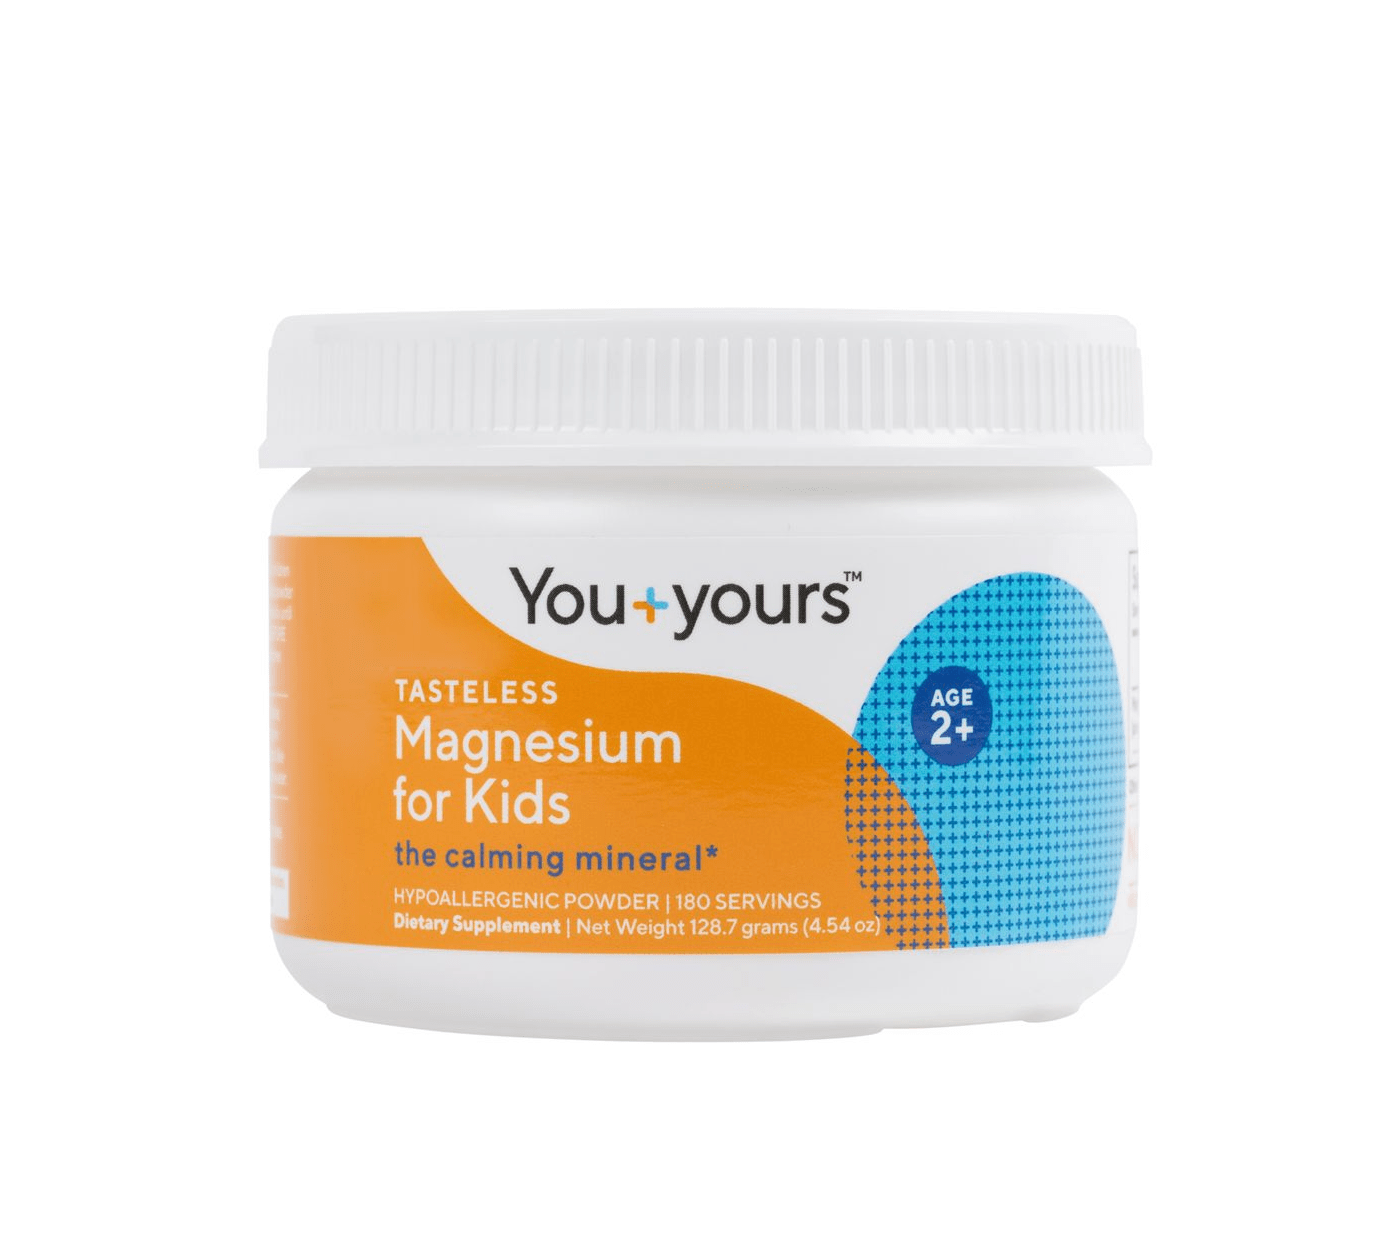 Tasteless, Calming Magnesium for Kids